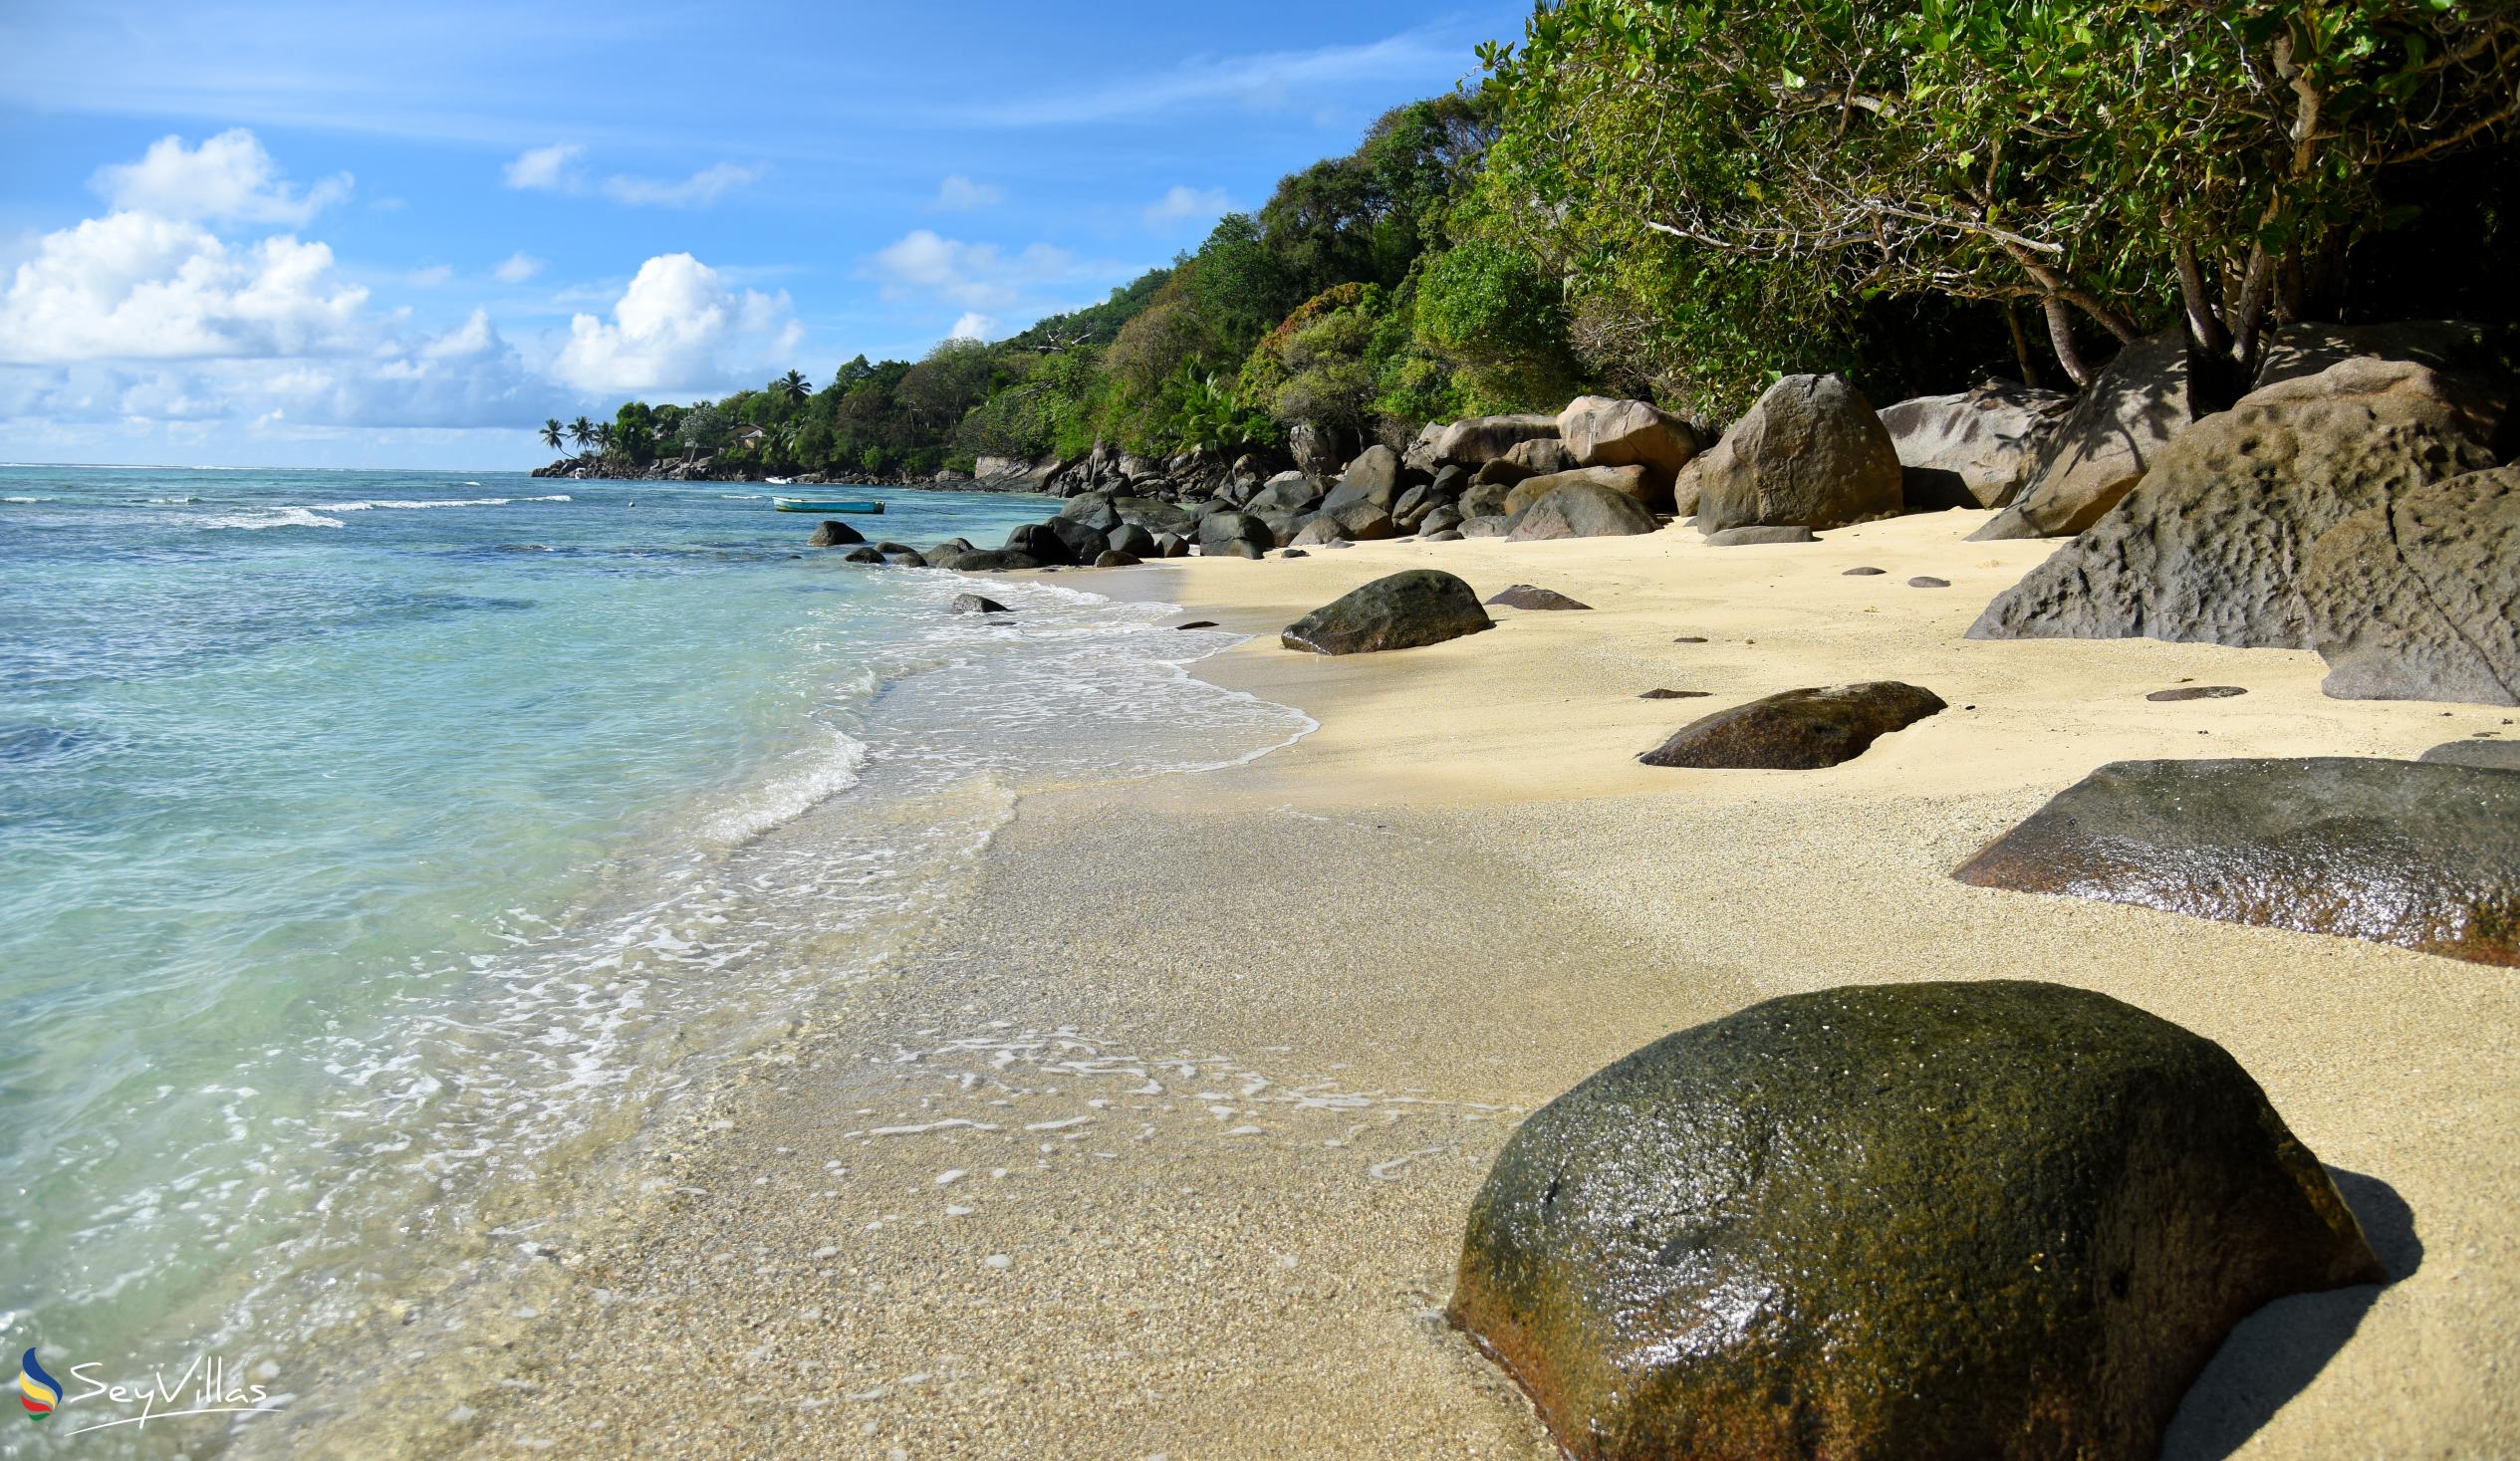 Photo 4: Anse Baleine - Mahé (Seychelles)